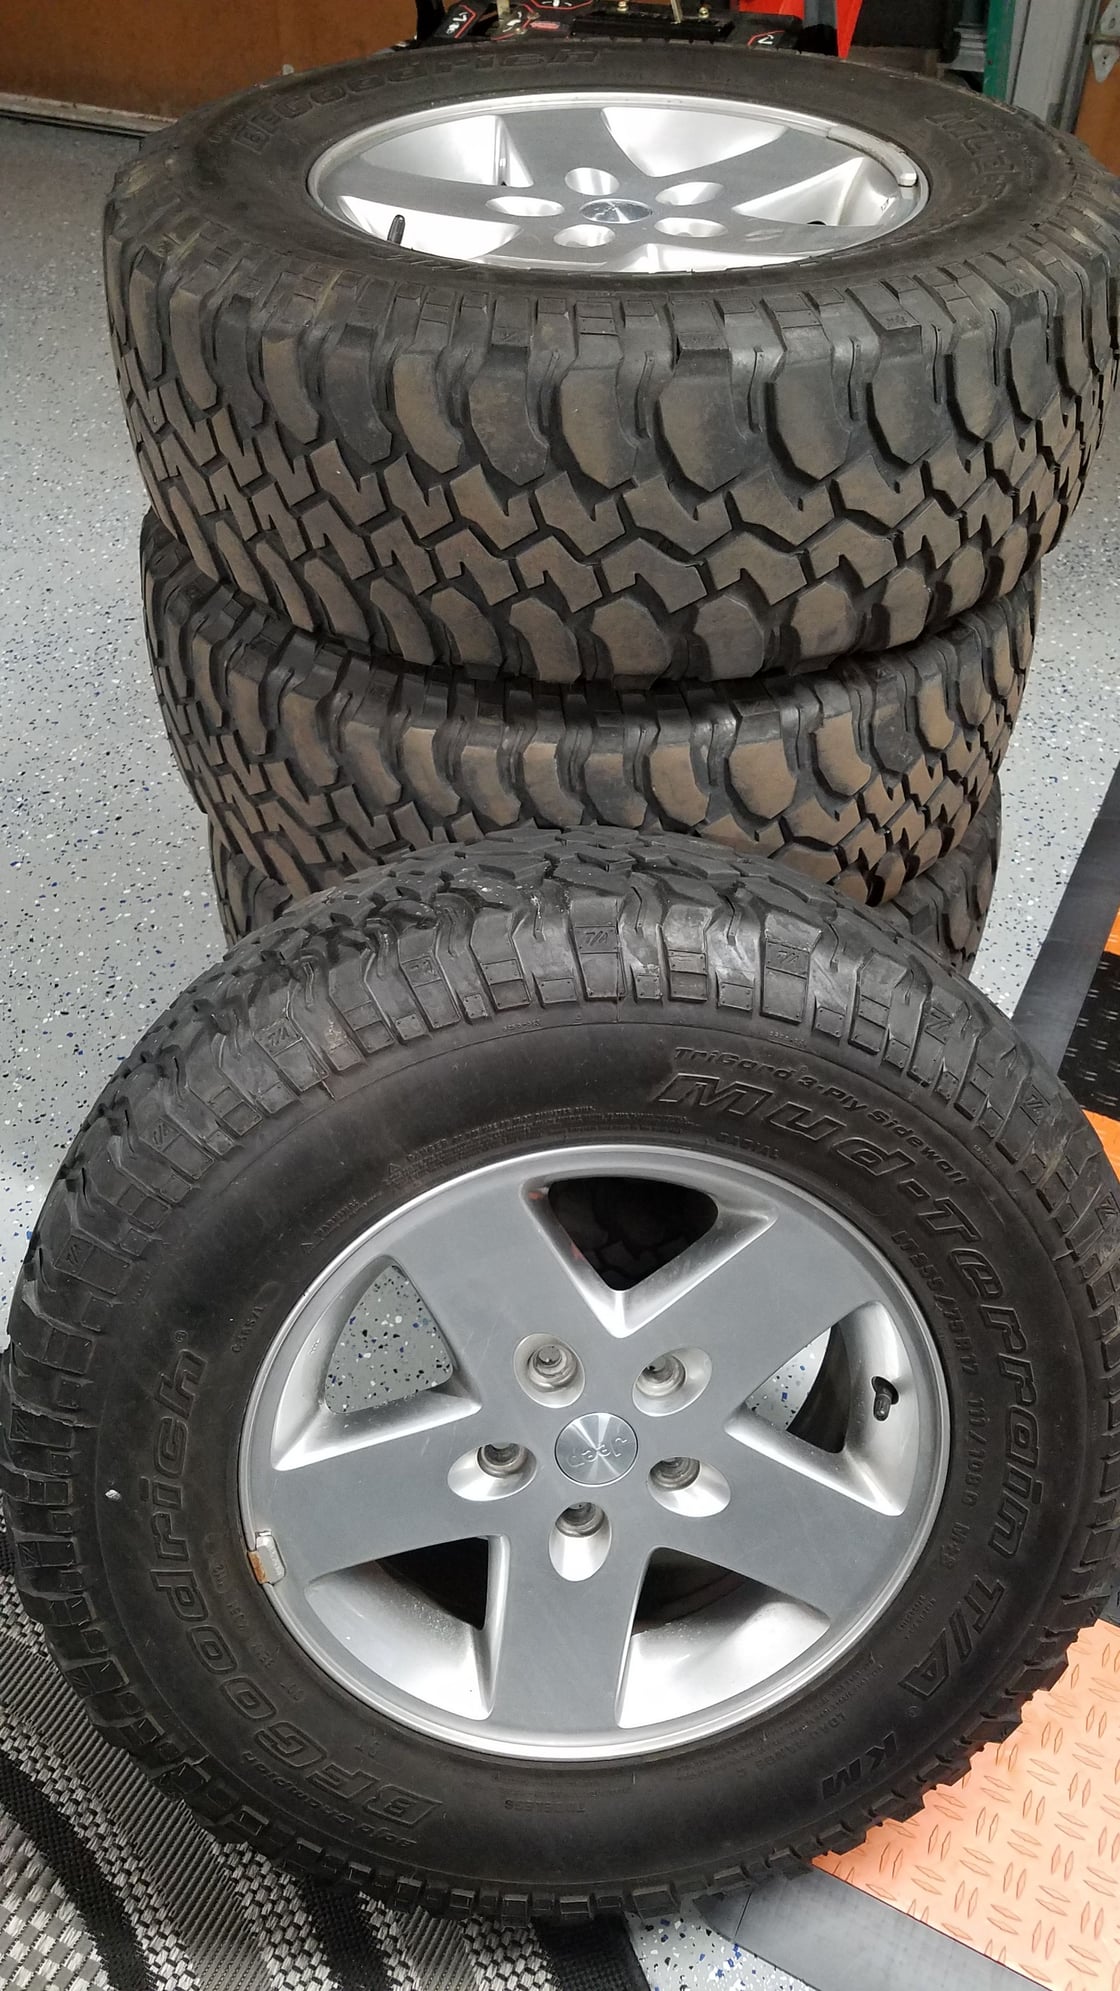 Wheels and Tires/Axles - Stock wheels & BFG Mud Terrain LT255/75R17 - NJ - Used - 2007 to 2017 Jeep Wrangler - West Milford, NJ 07421, United States